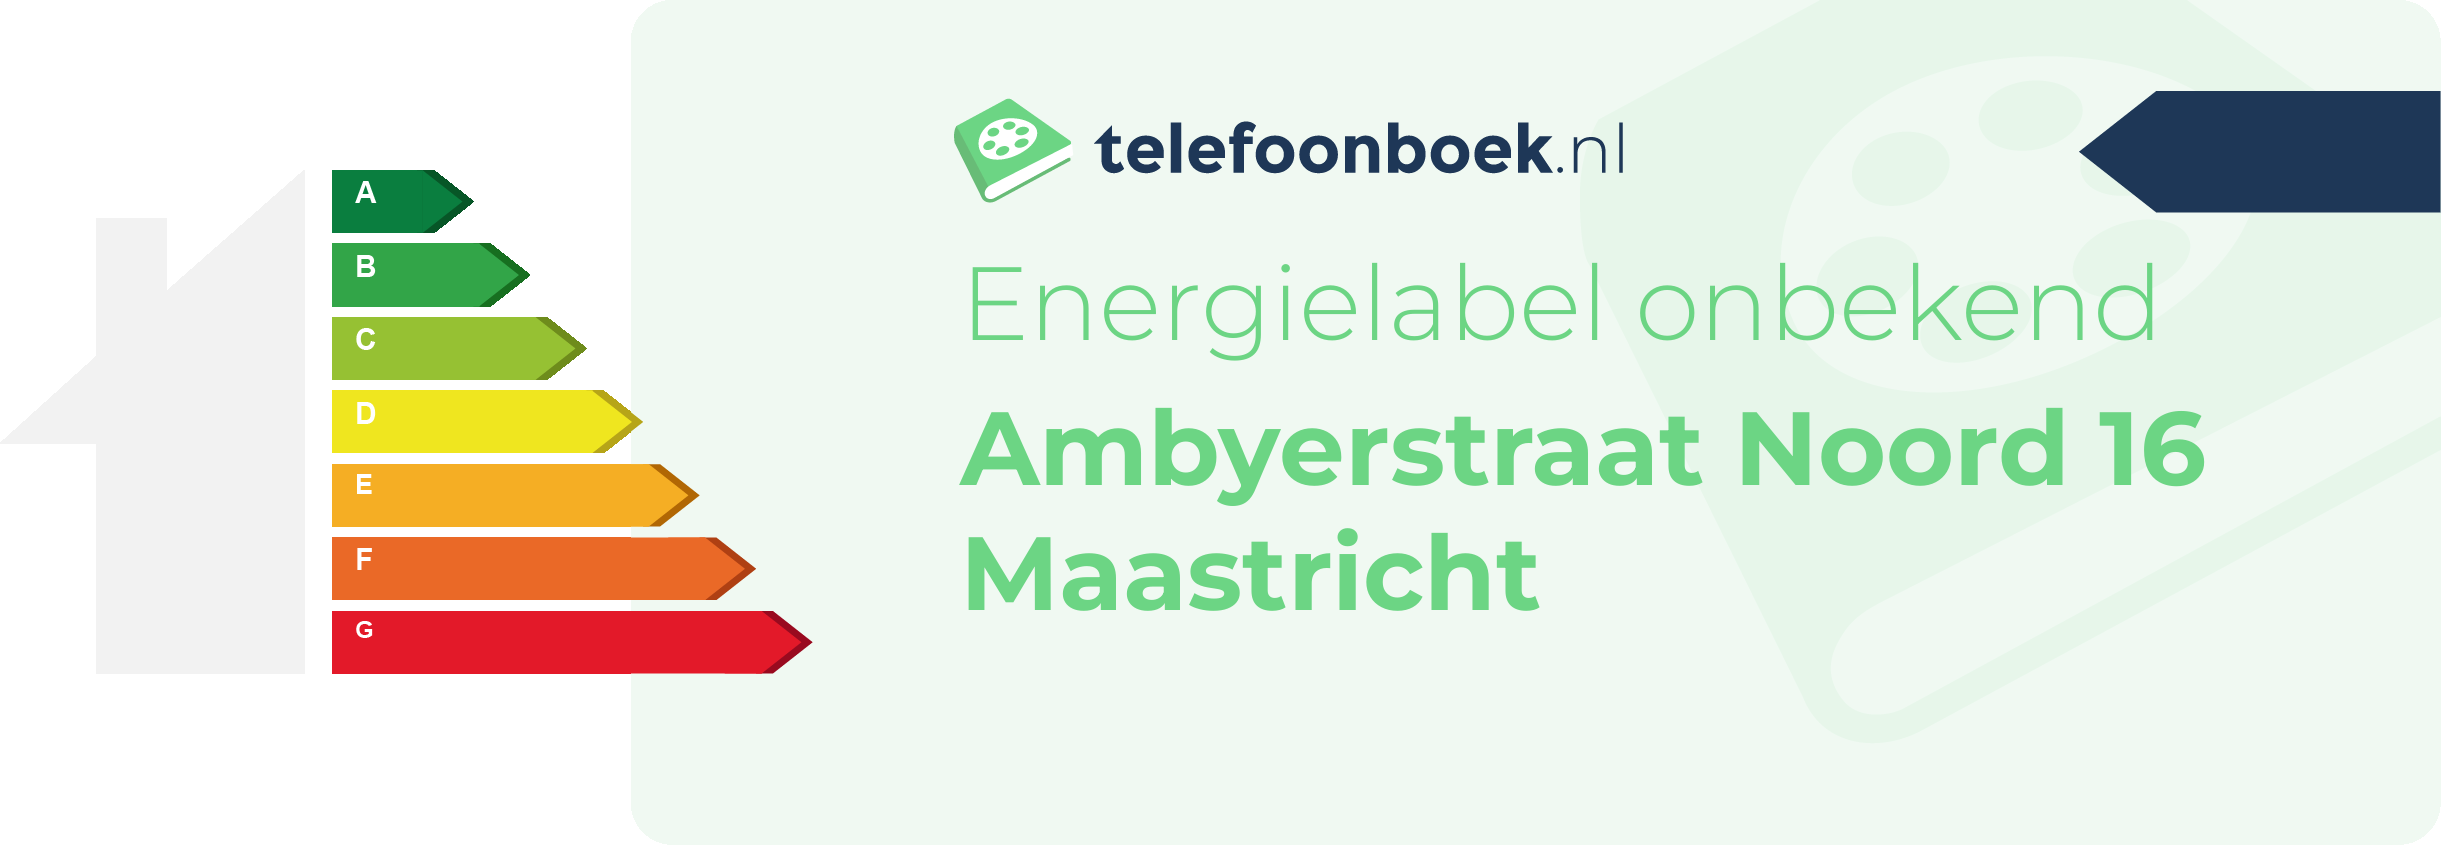 Energielabel Ambyerstraat Noord 16 Maastricht